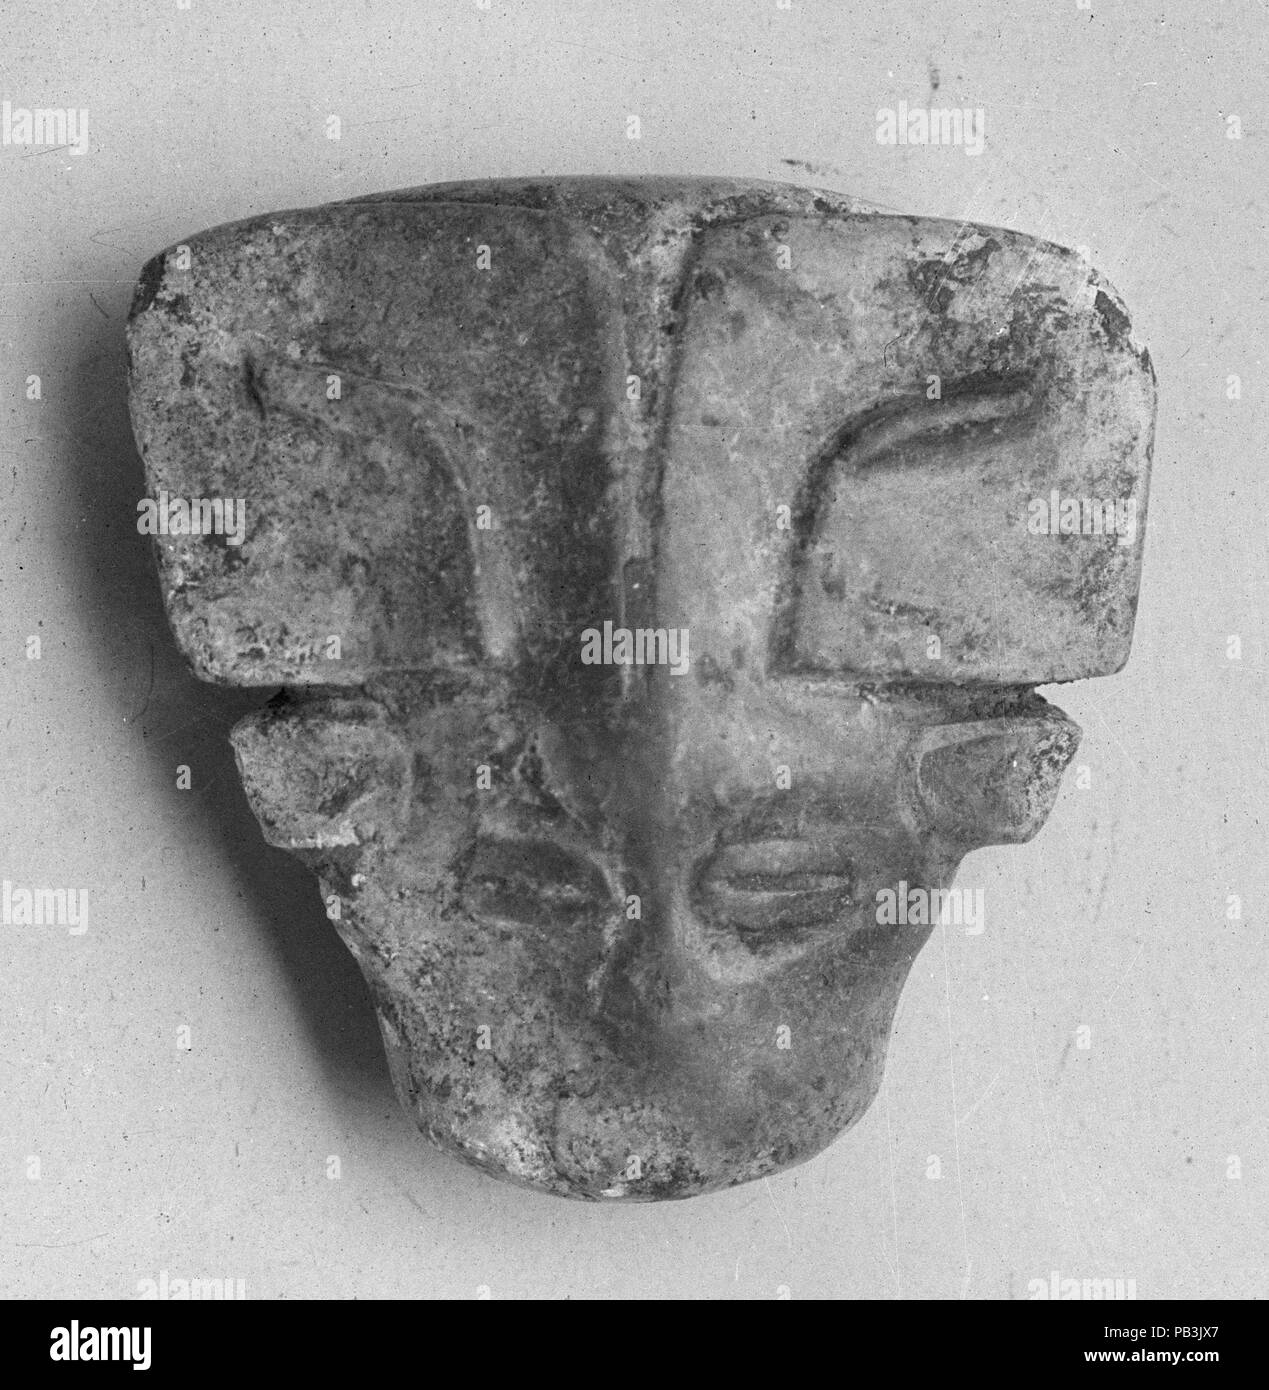 La placca a forma di testa di animale. Cultura: la Cina. Dimensioni: H. 1 1/4 in. (3.2 cm); W. 1 1/4 in. (3.2 cm). Data: IX - X secolo A.C. Museo: Metropolitan Museum of Art di New York, Stati Uniti d'America. Foto Stock